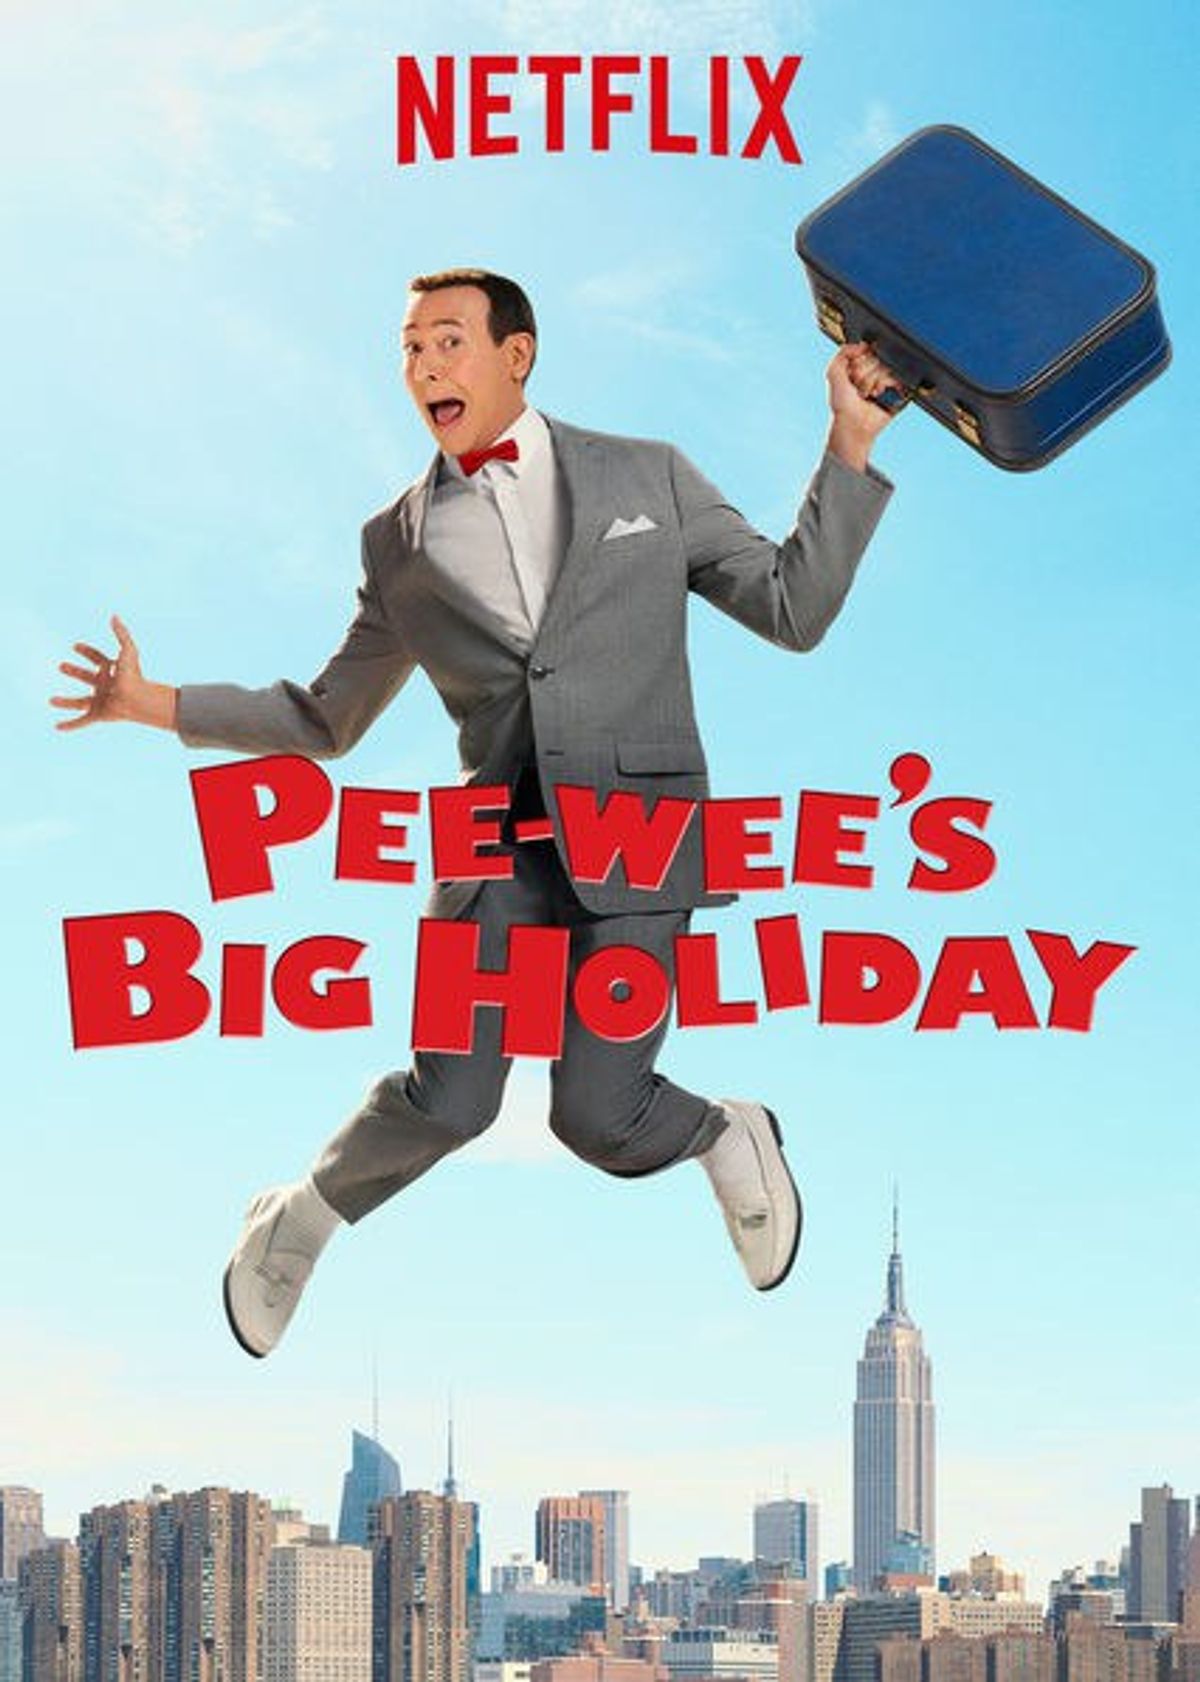 "Pee-wee's Big Holiday" Might Kill You!